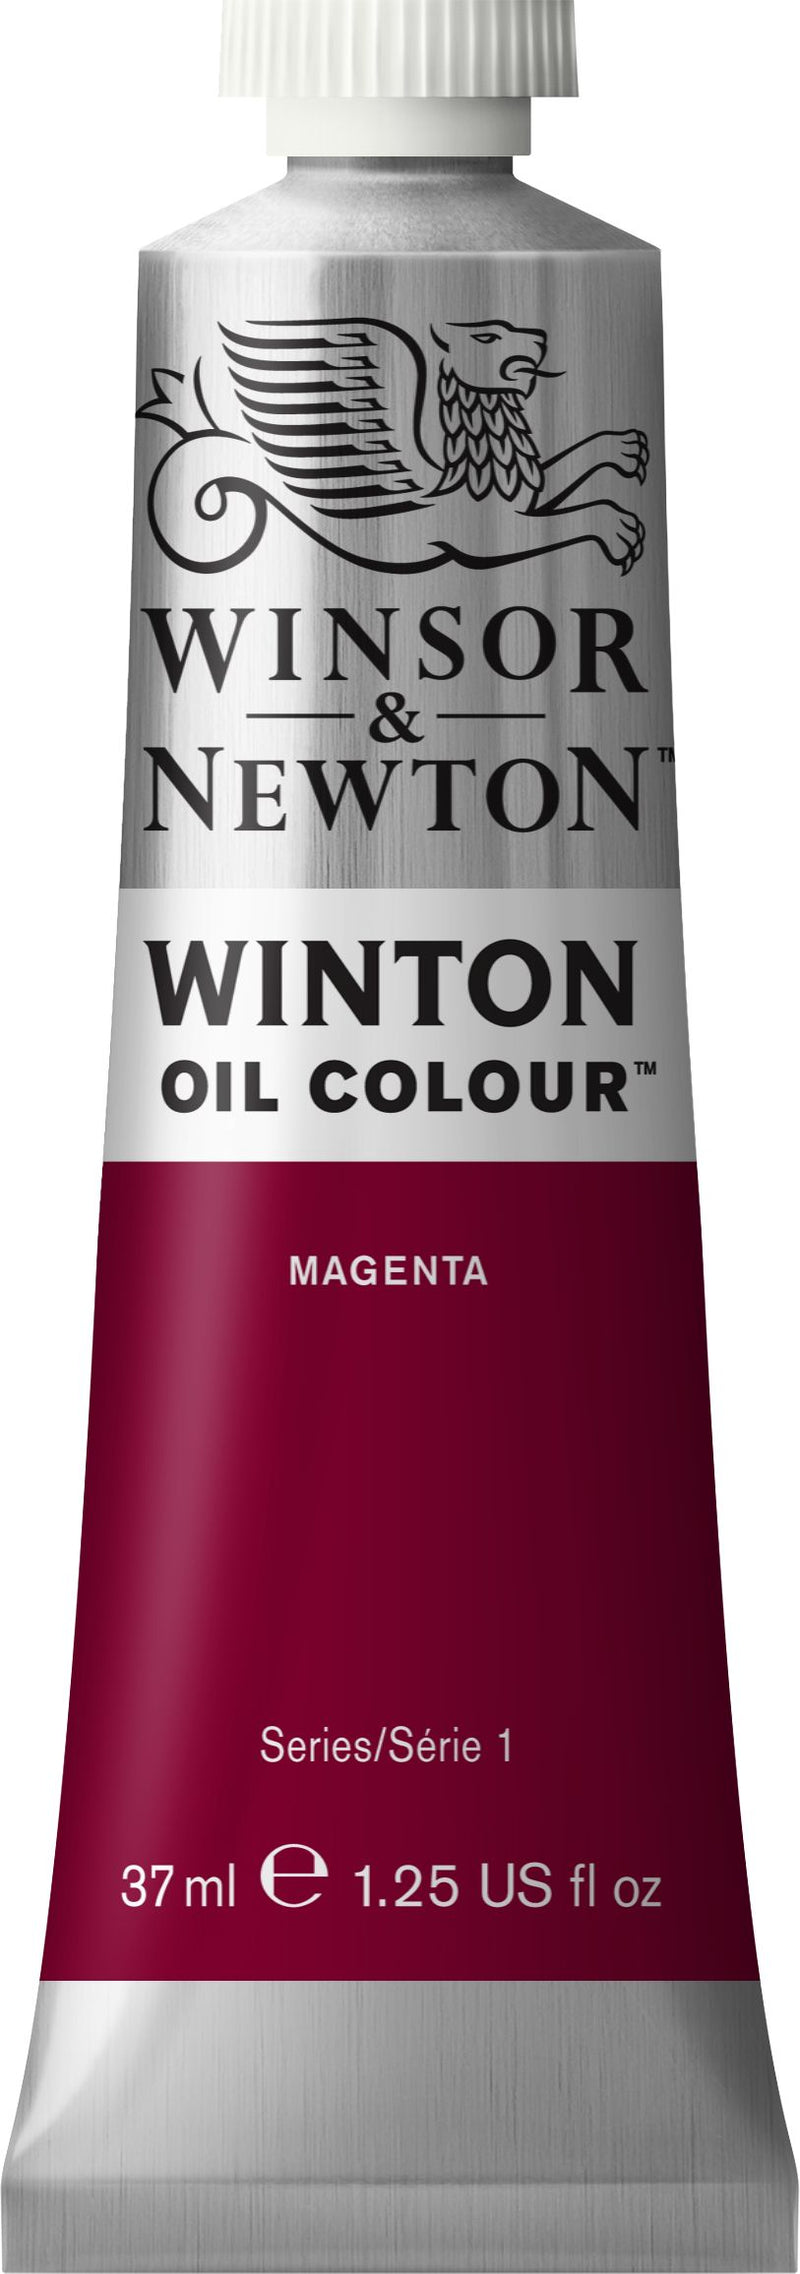 Winton Oil Colour Magenta - 37ml tube